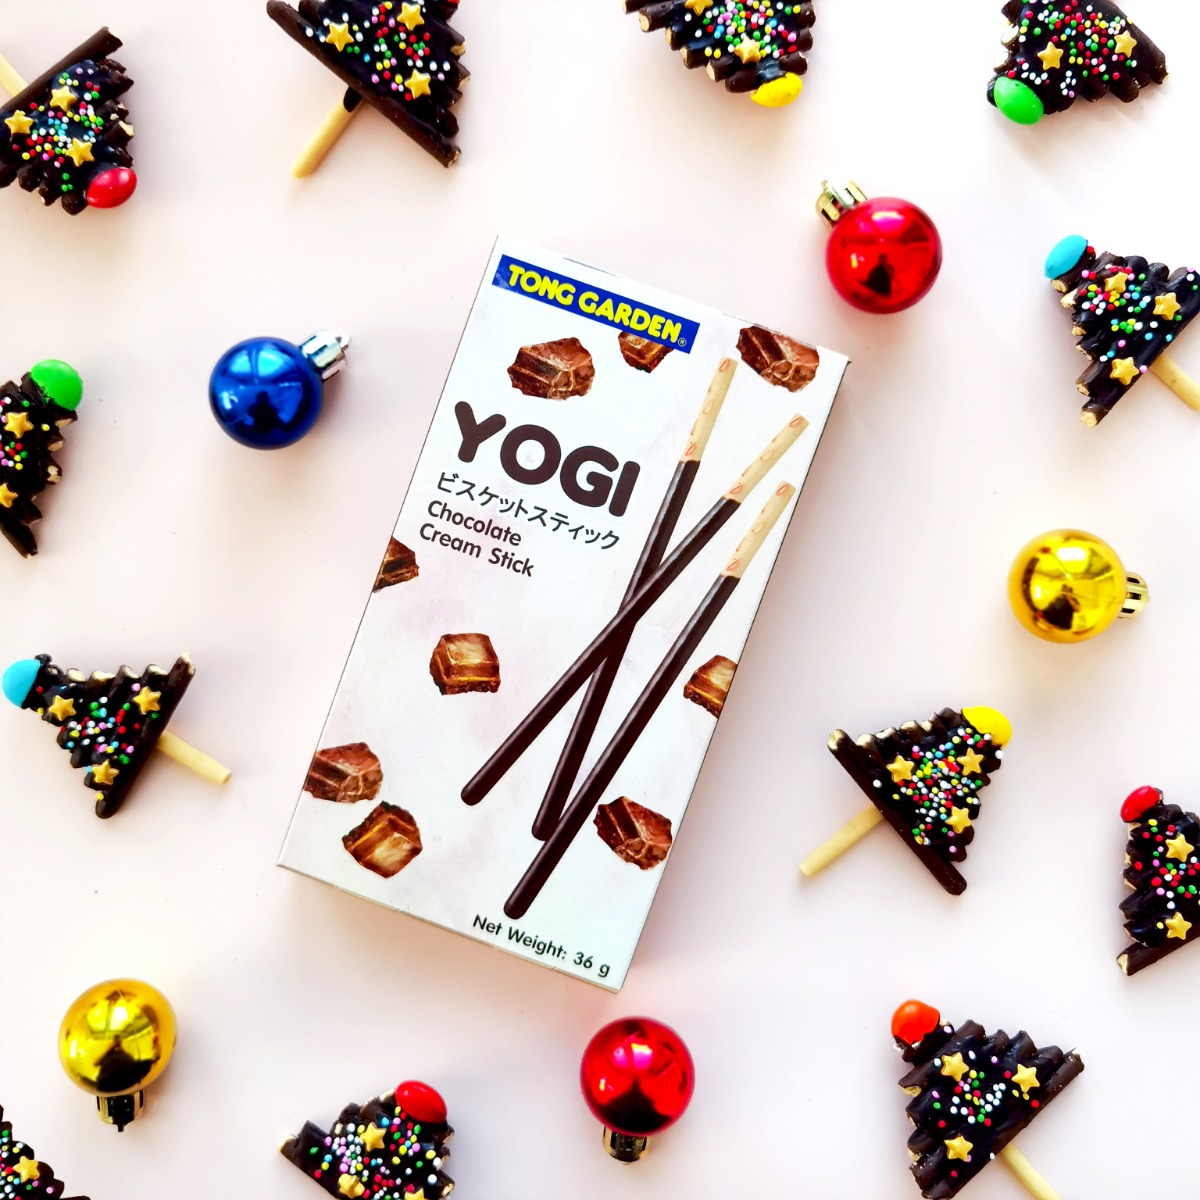 Tong Garden's Recipe l Yogi Chocolate Christmas Tree